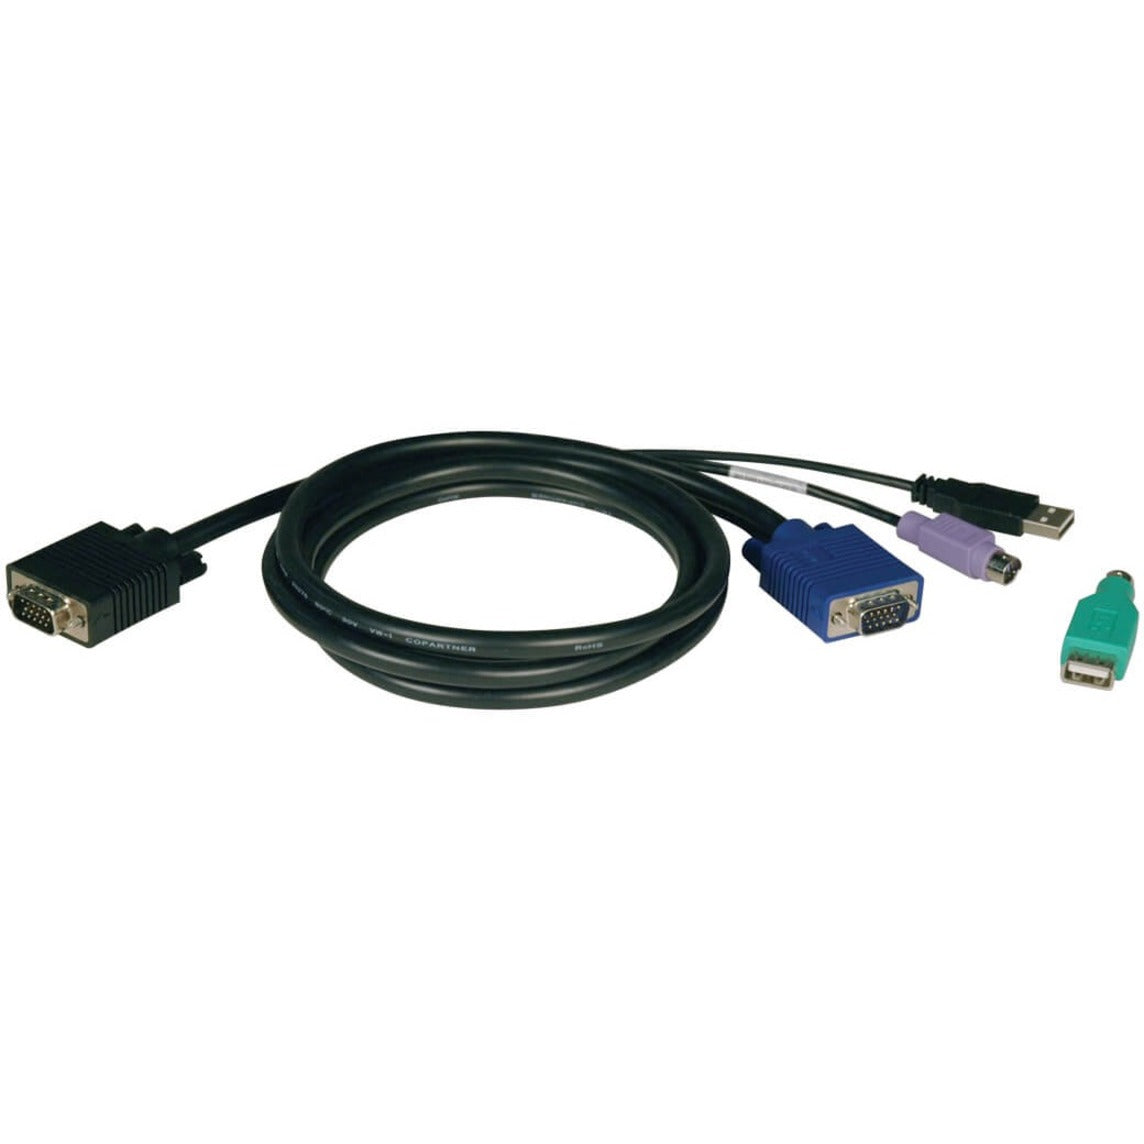 تريب لايت كابل KVM P780-010 ل B040 و B042 KVM، 10 قدم - إدارة الكابلات السهلة والأداء الأفضل